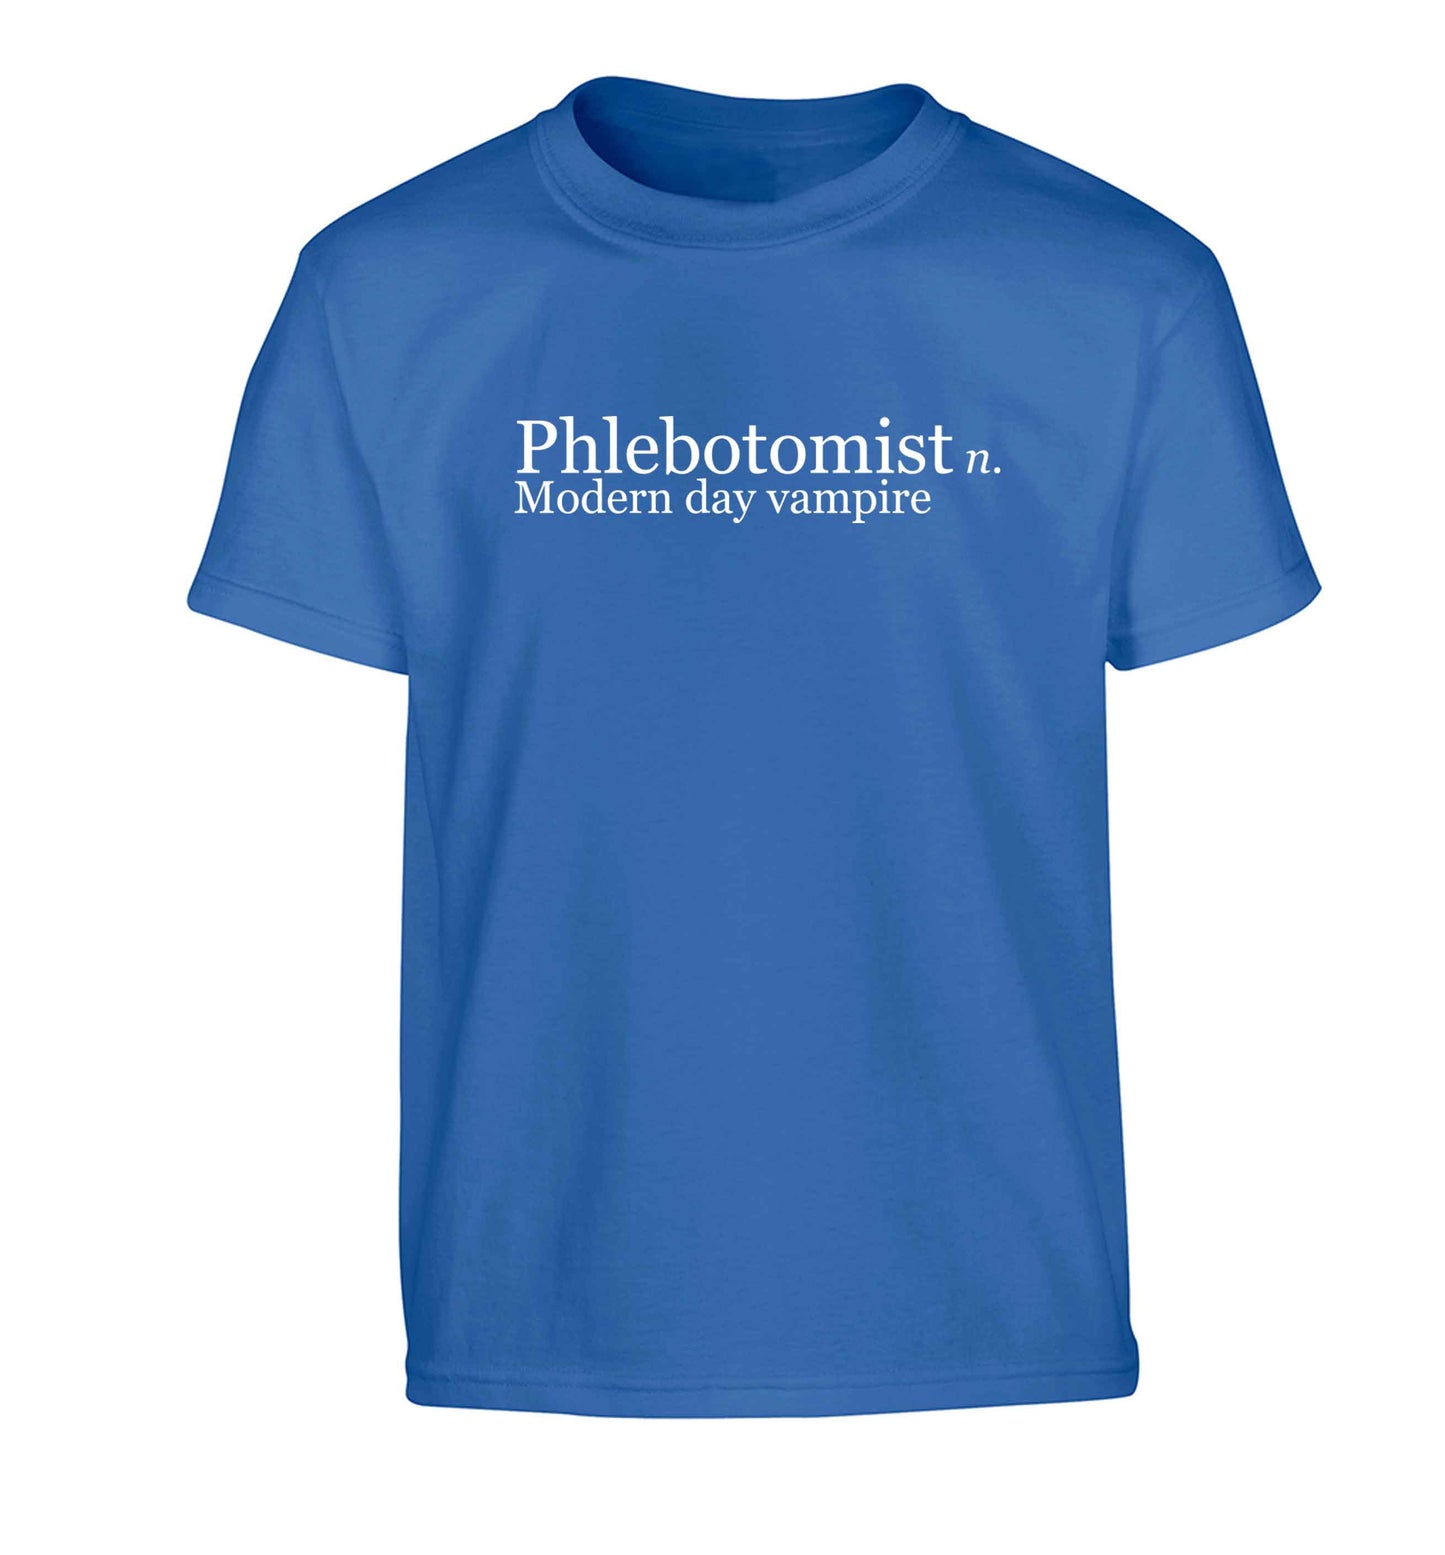 Phlebotomist - Modern day vampire Children's blue Tshirt 12-13 Years